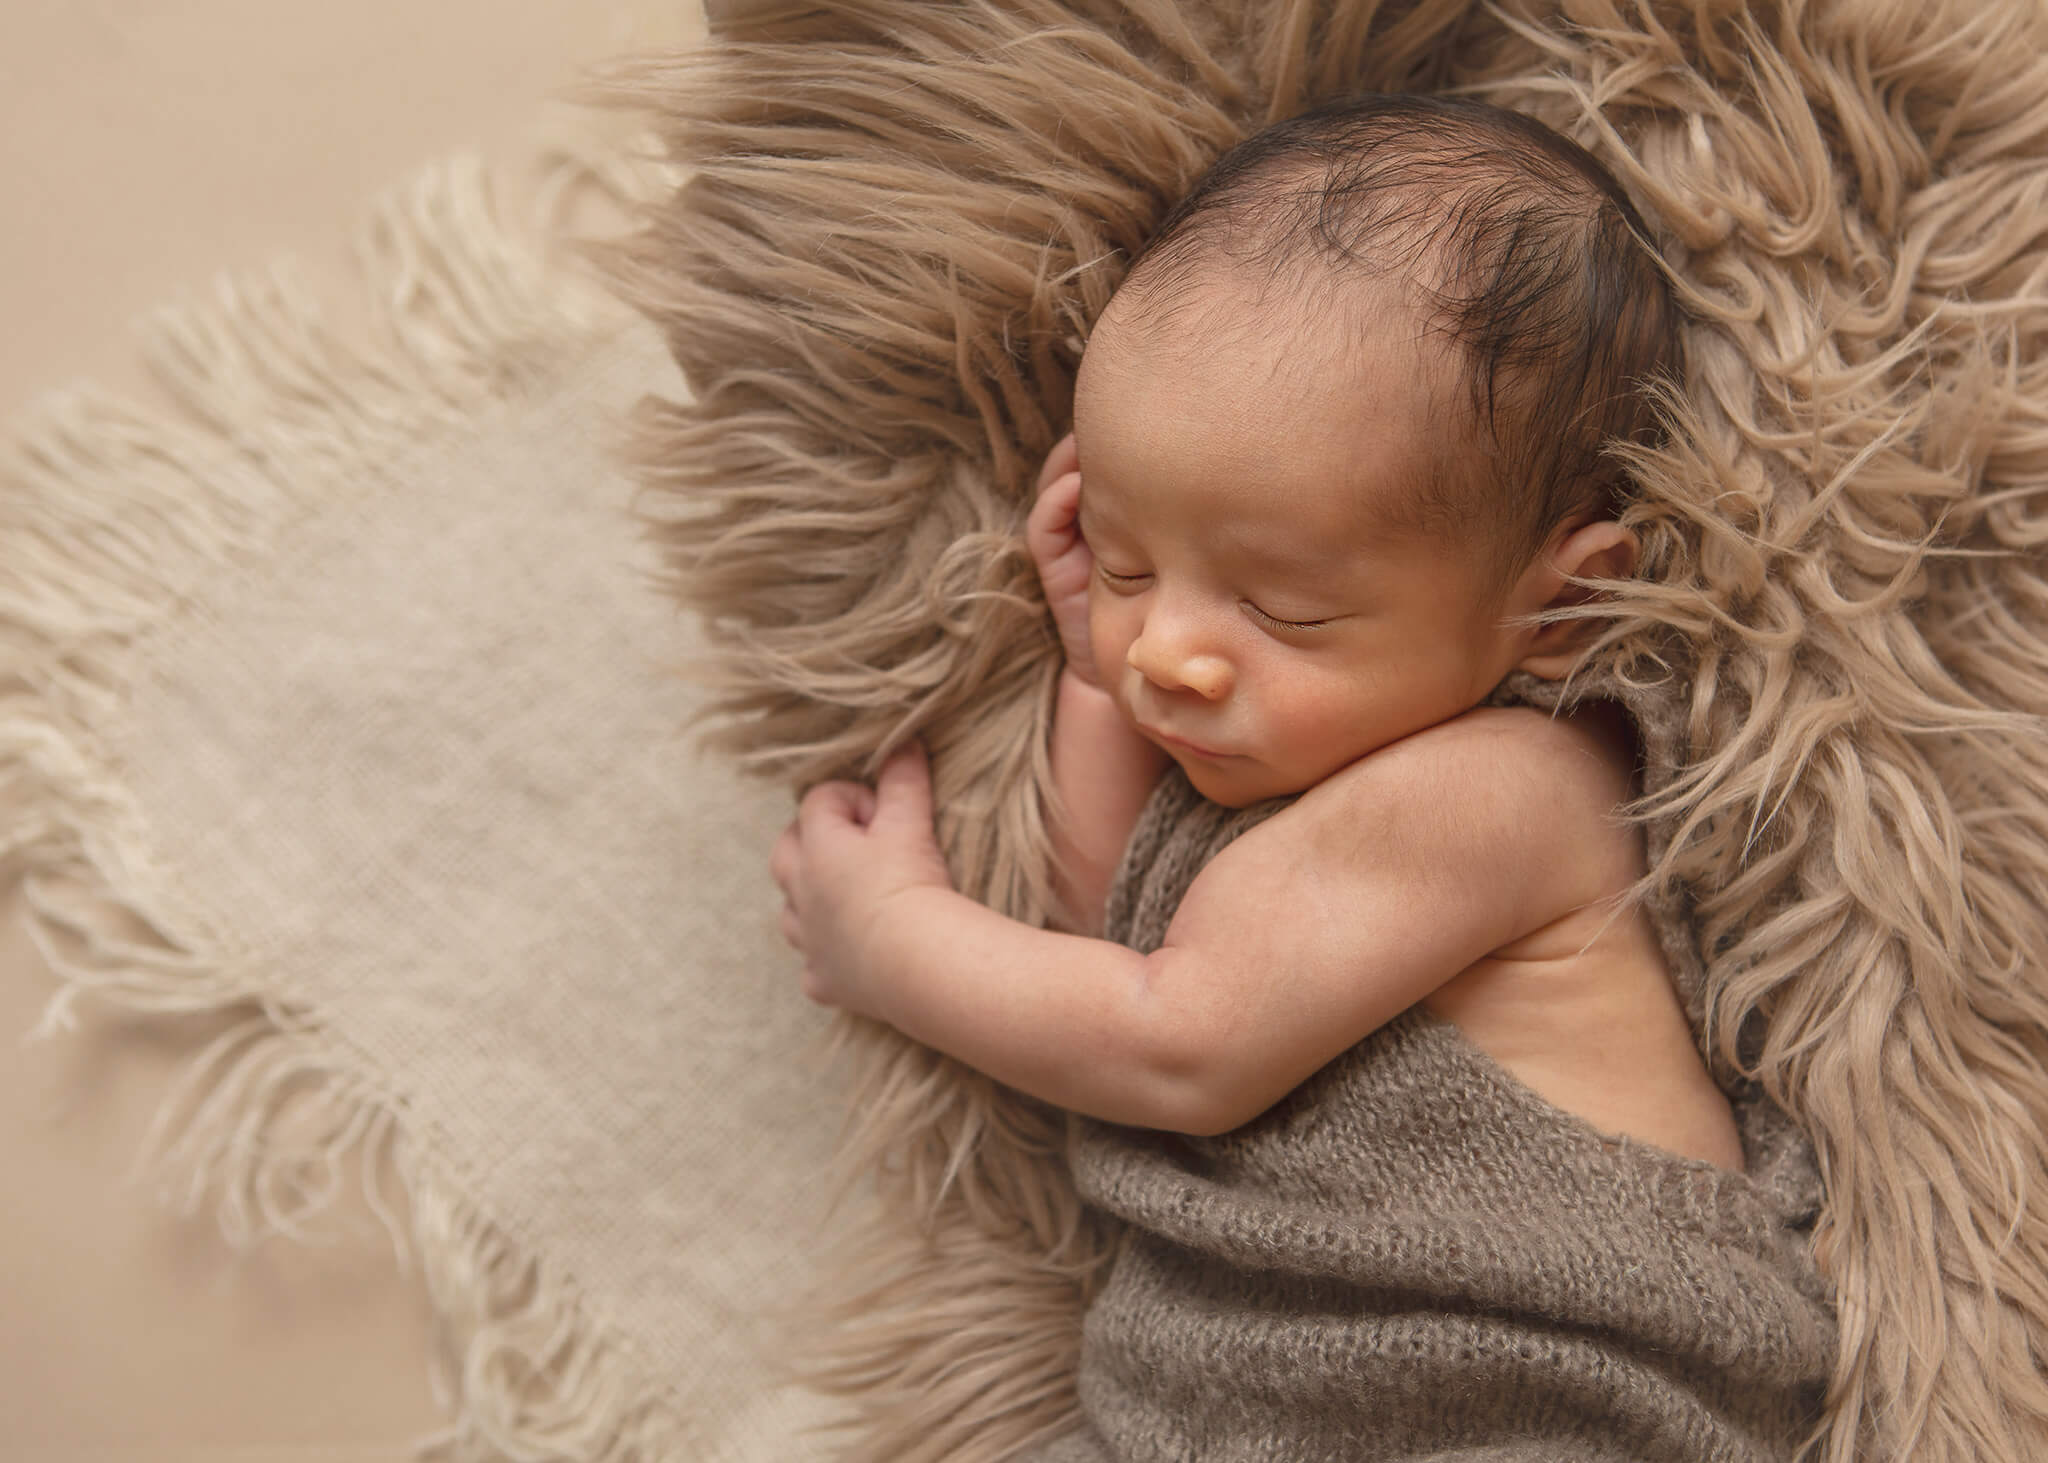 newborn baby boy laying on fur blanket asleep taken by newborn photographer Elsie Rose Photography in LA